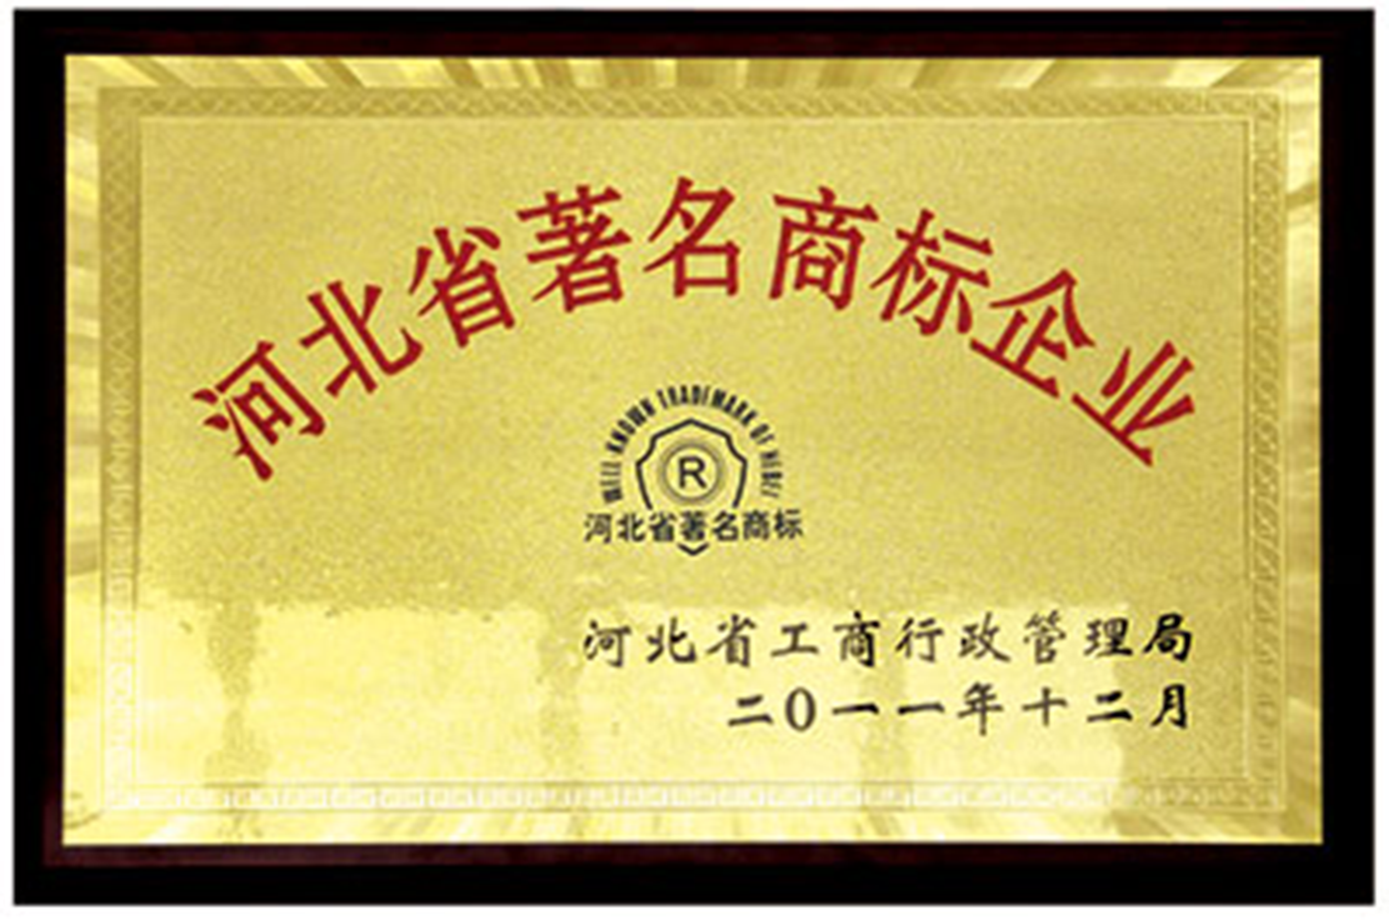 Famous Trademark Enterprises in Hebei Province